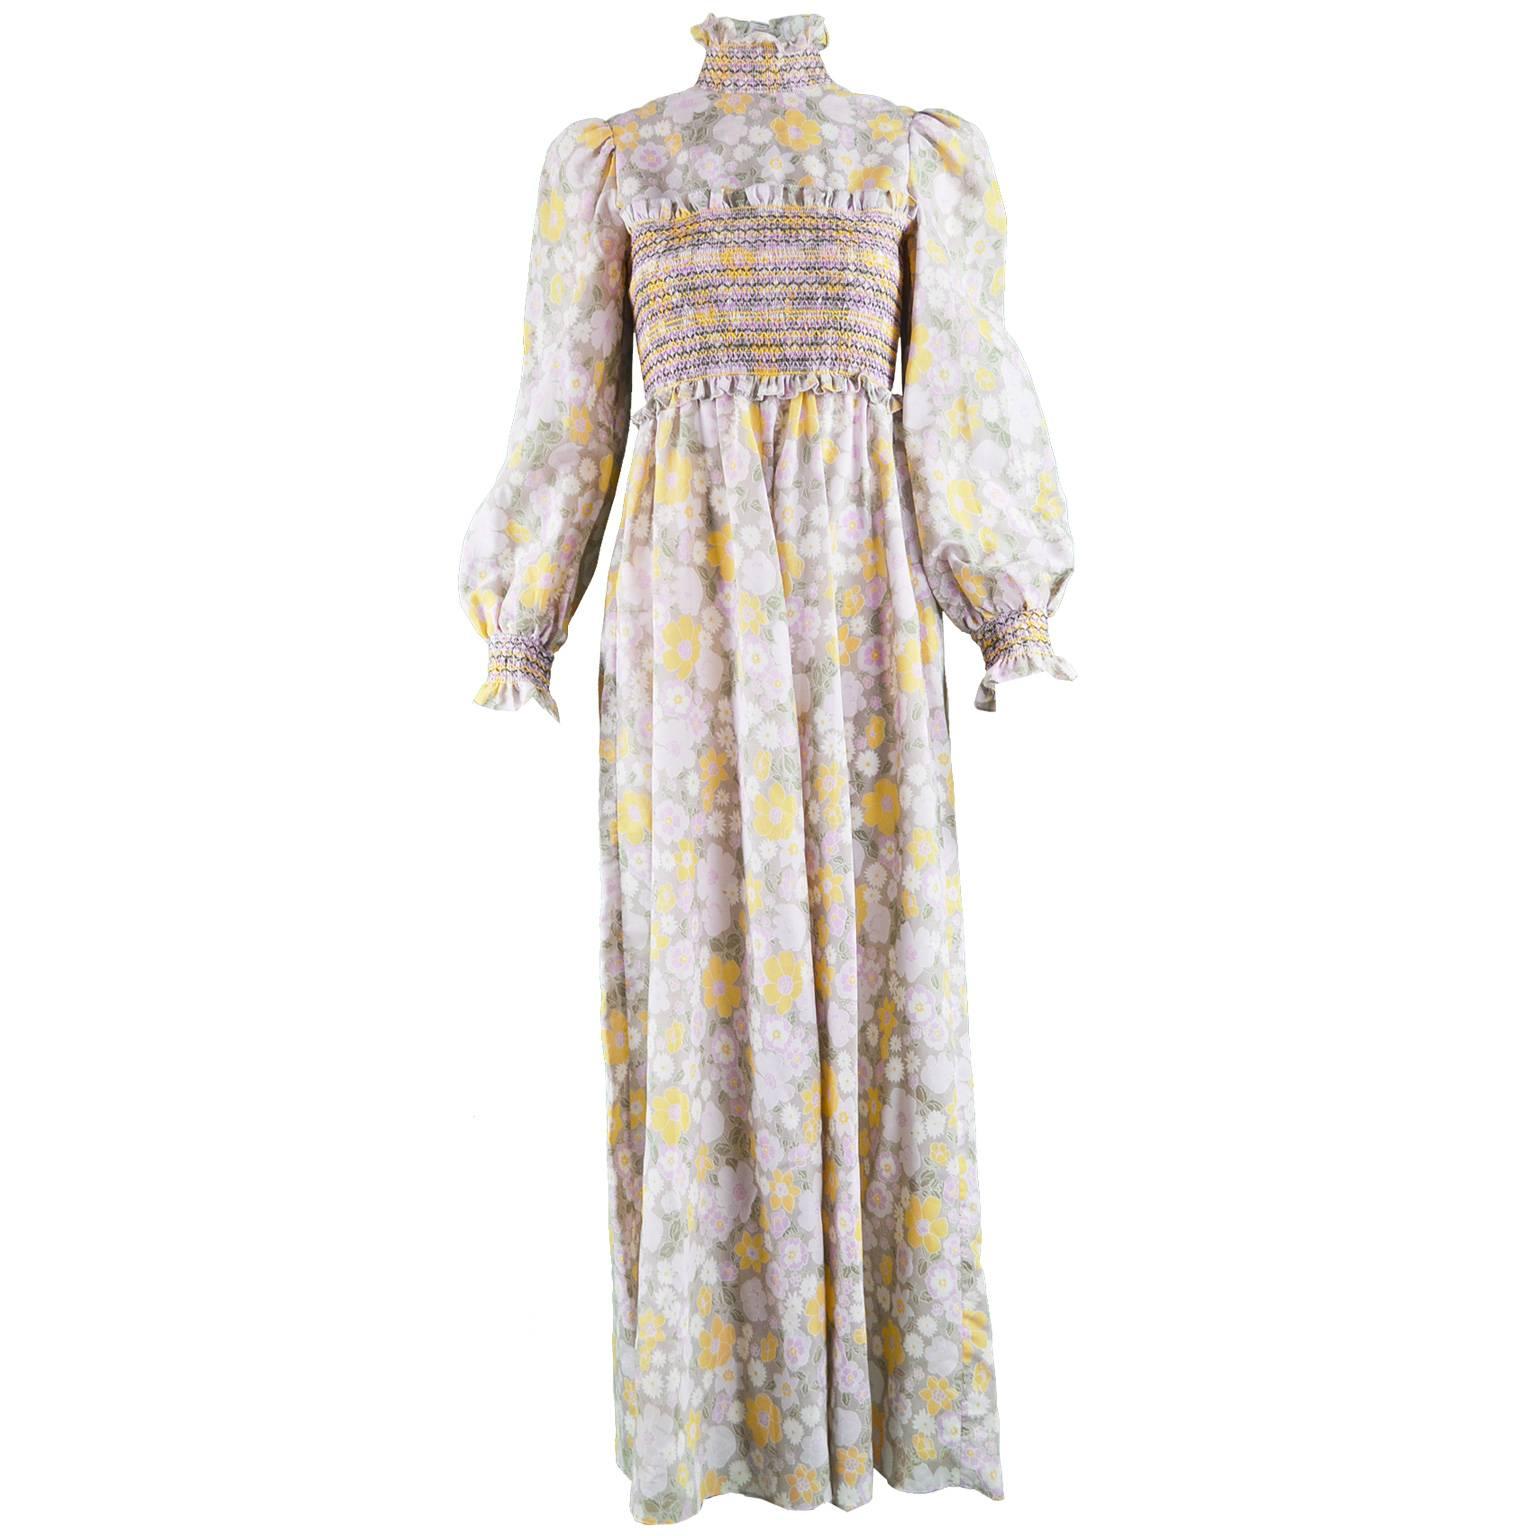 Roland Klein for Marcel Fenez Smocked Floral Cotton Voile Maxi Dress, 1970s For Sale